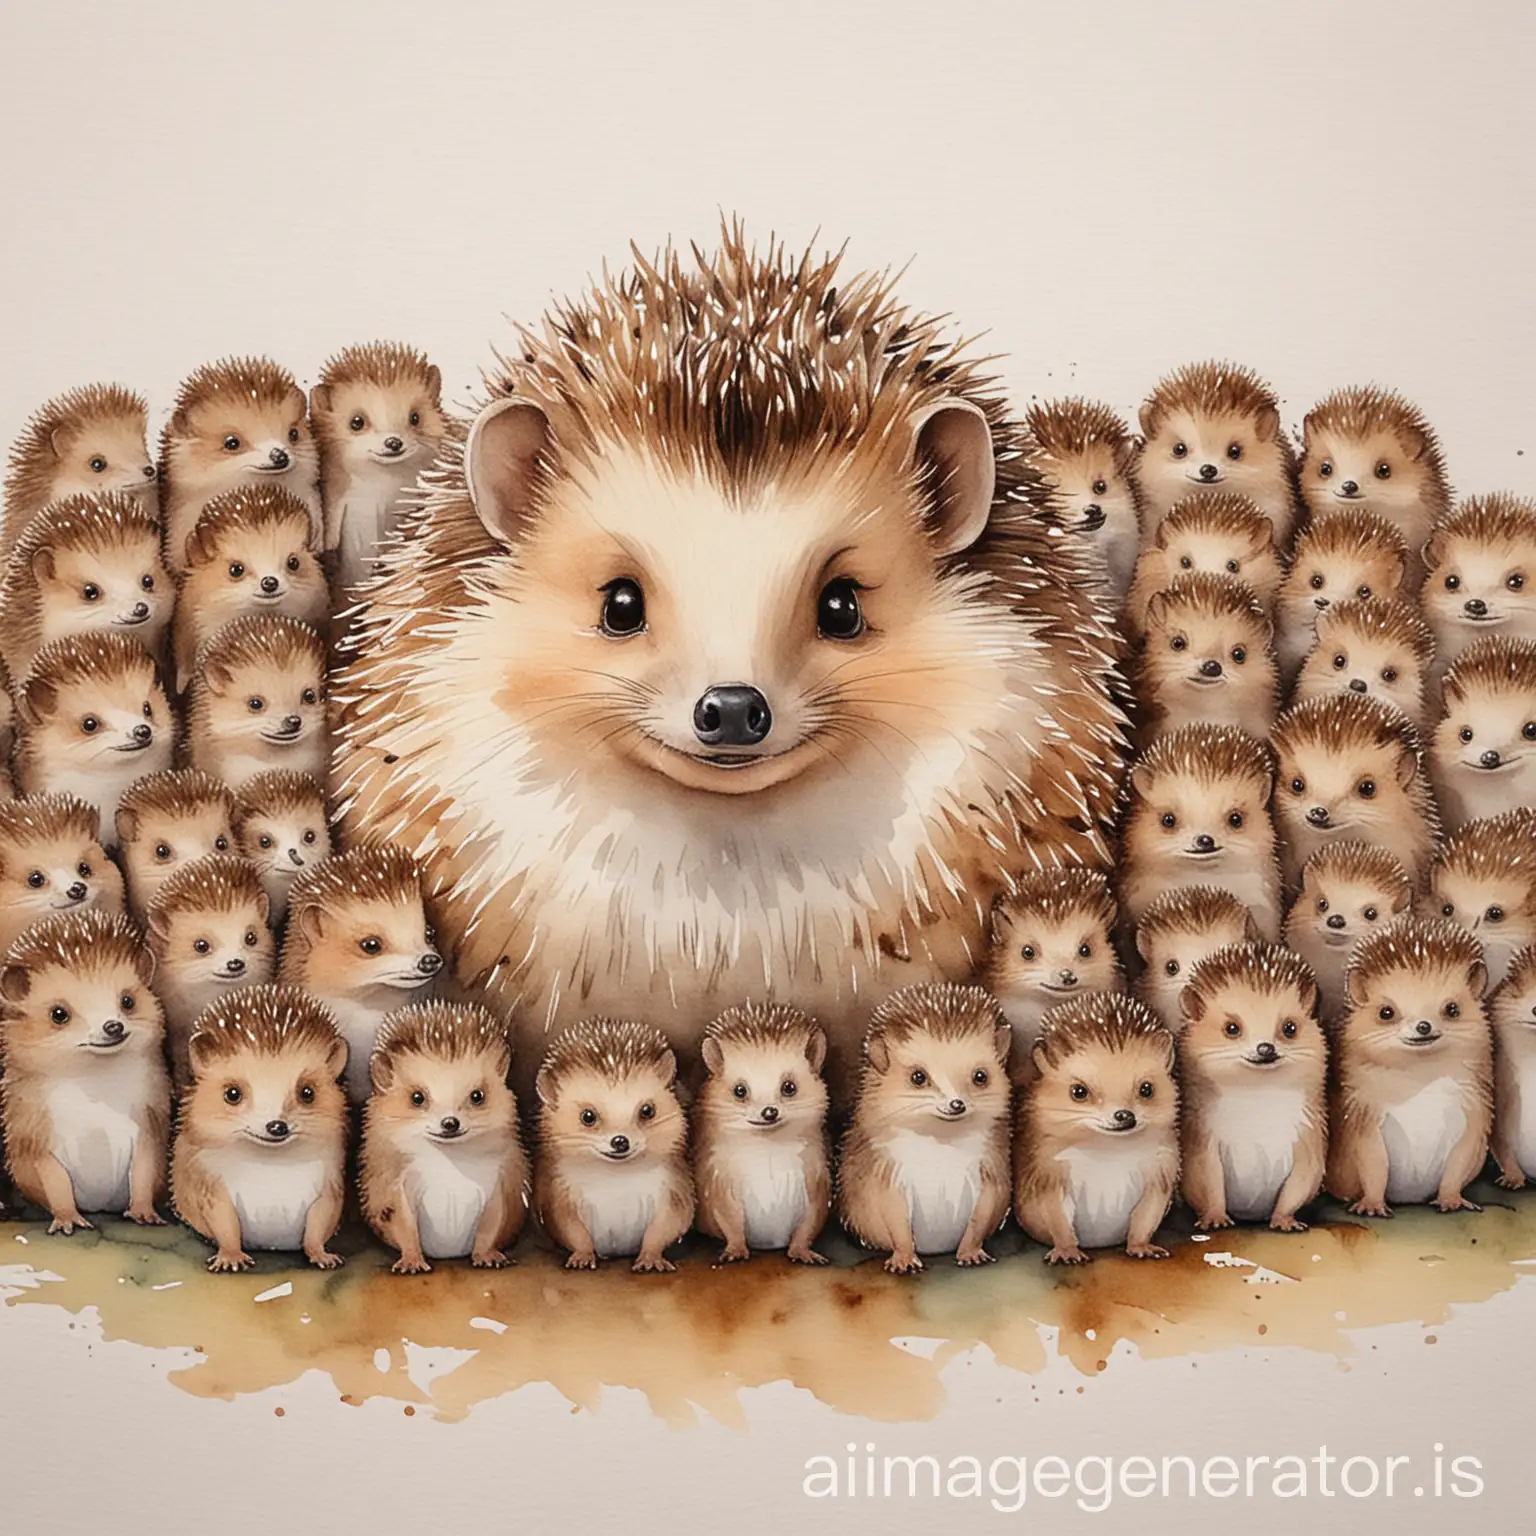 cute hedgehog kindergarten teacher with 20 hedgehog pupils aquarelle drawing